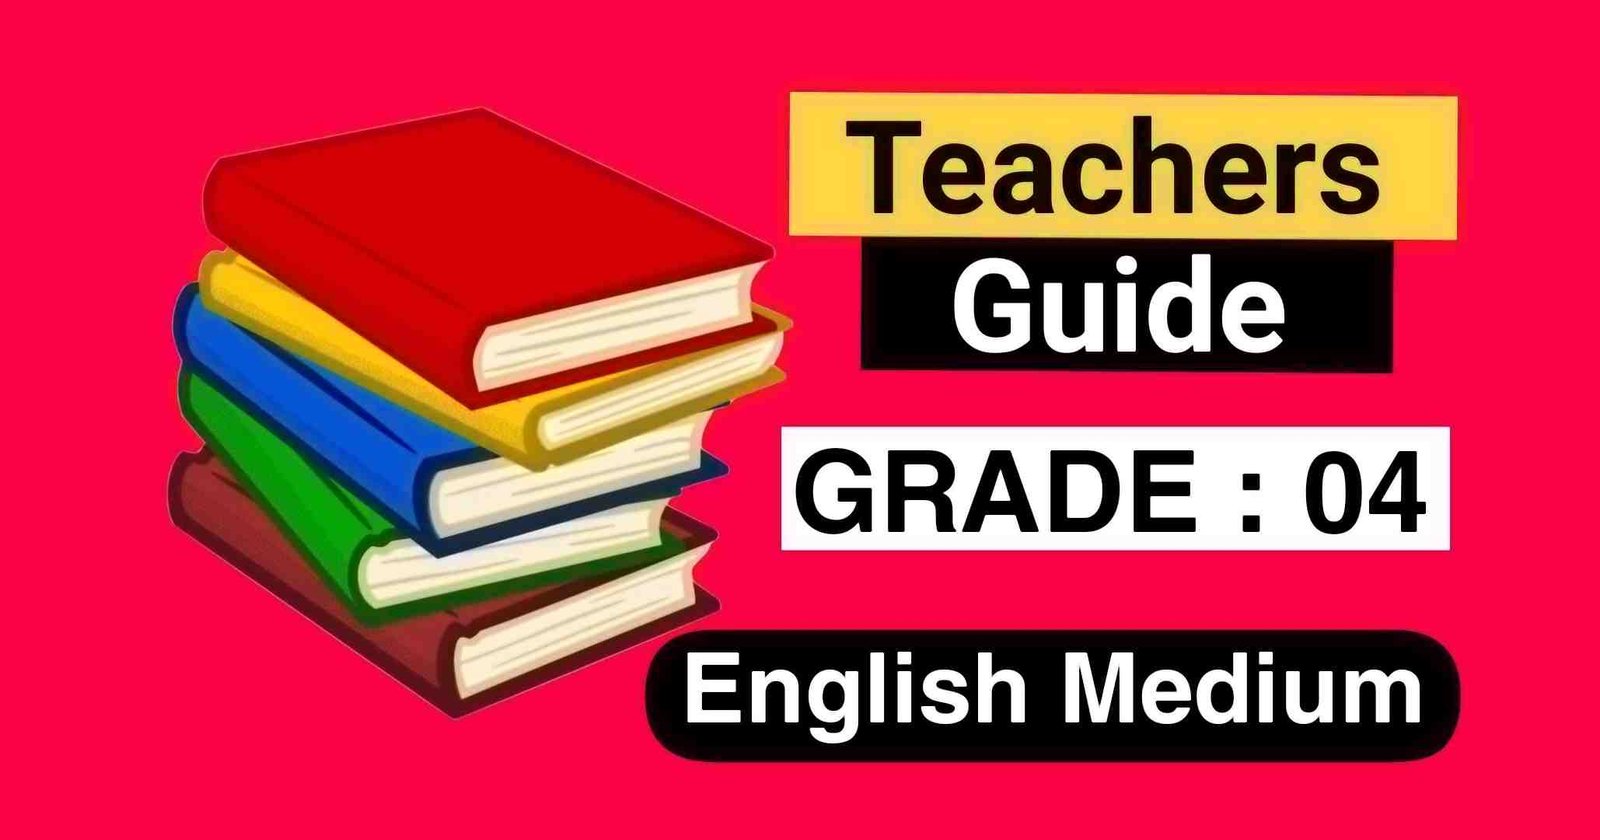 Grade 4 English Medium Teachers’ Guide Download